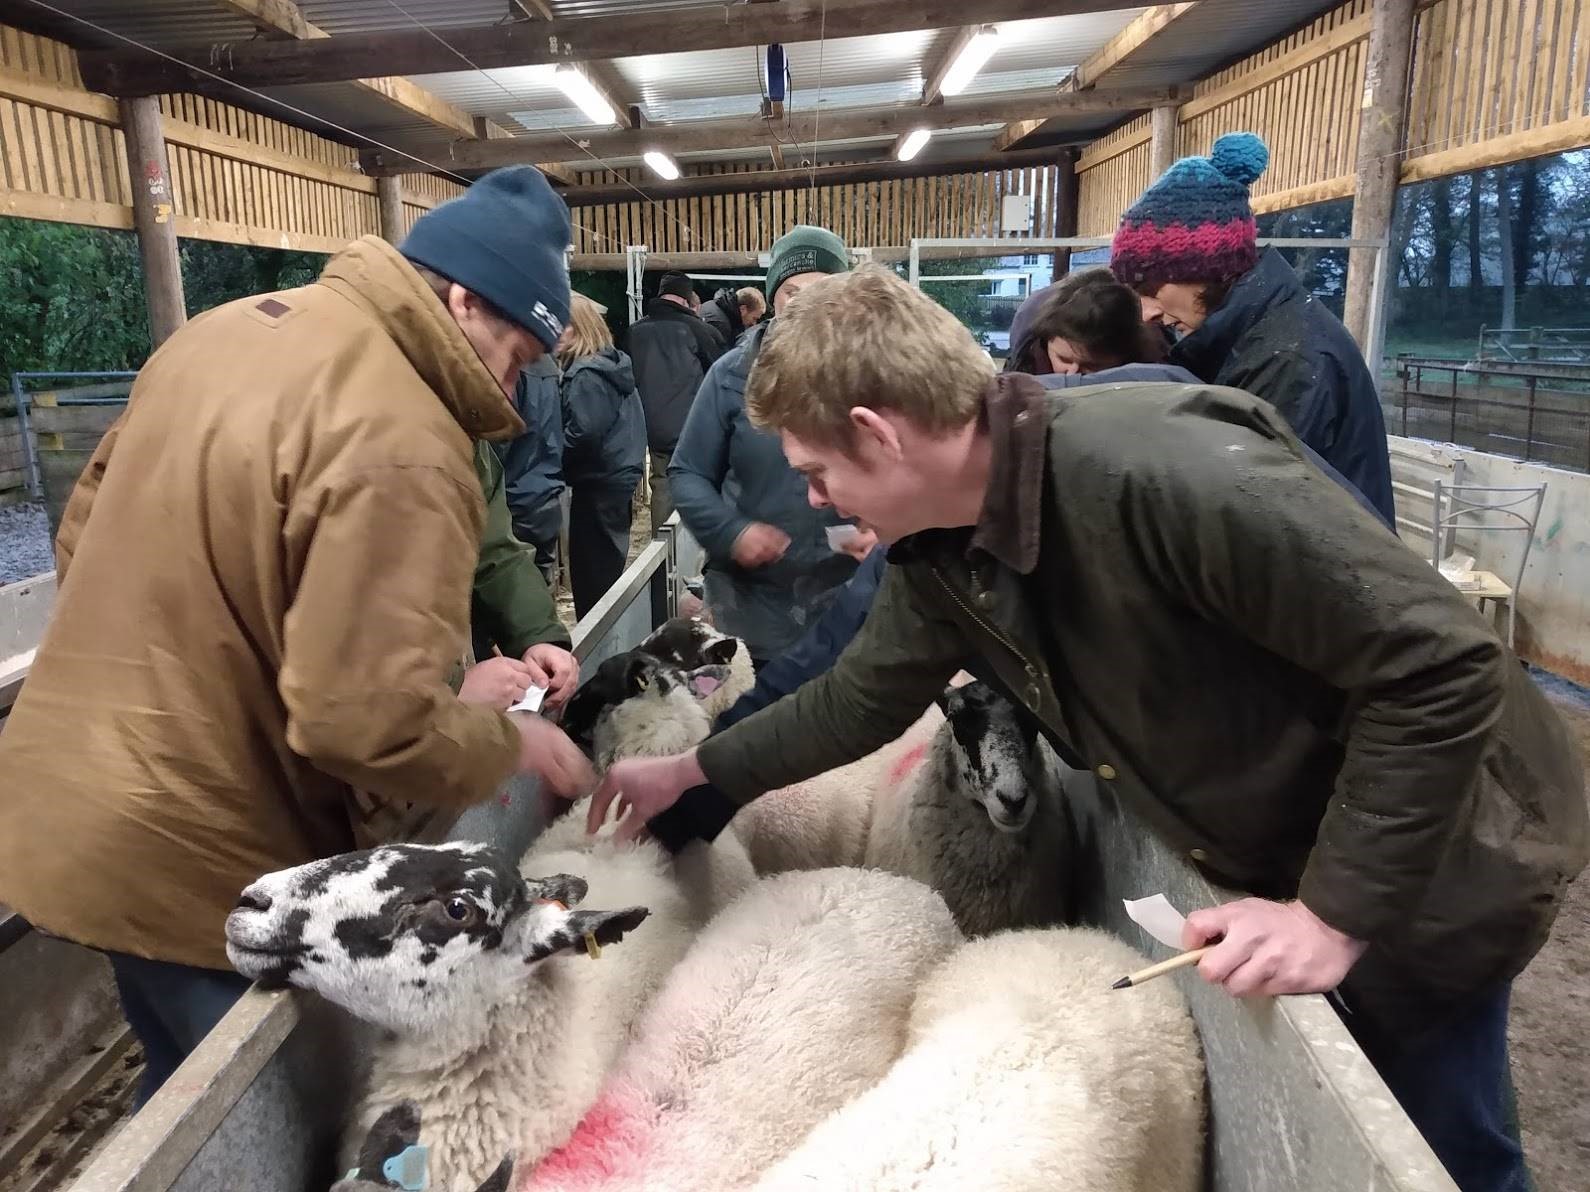 a group of people feeding sheep